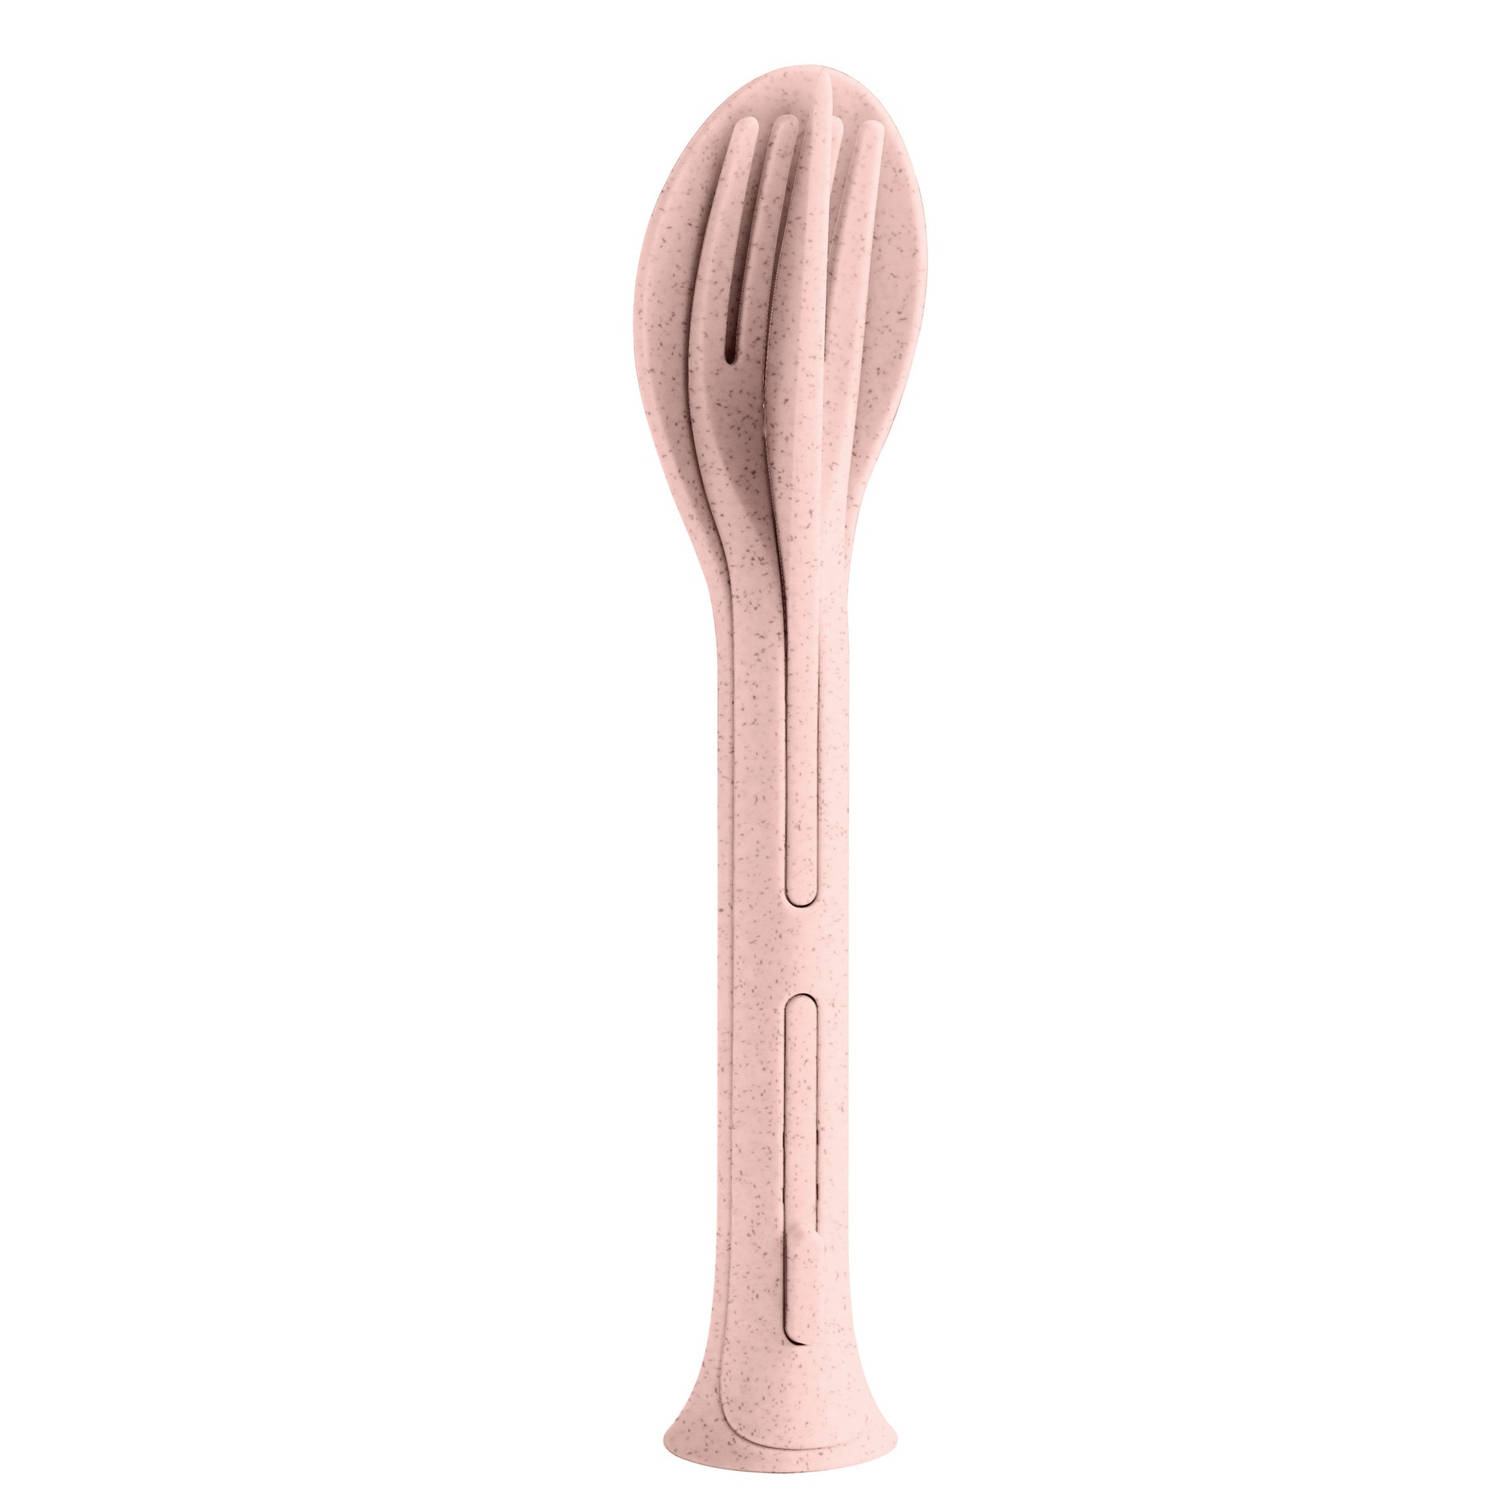 Koziol bestekset Klikk Pocket 17 cm thermoplast roze 3-delig